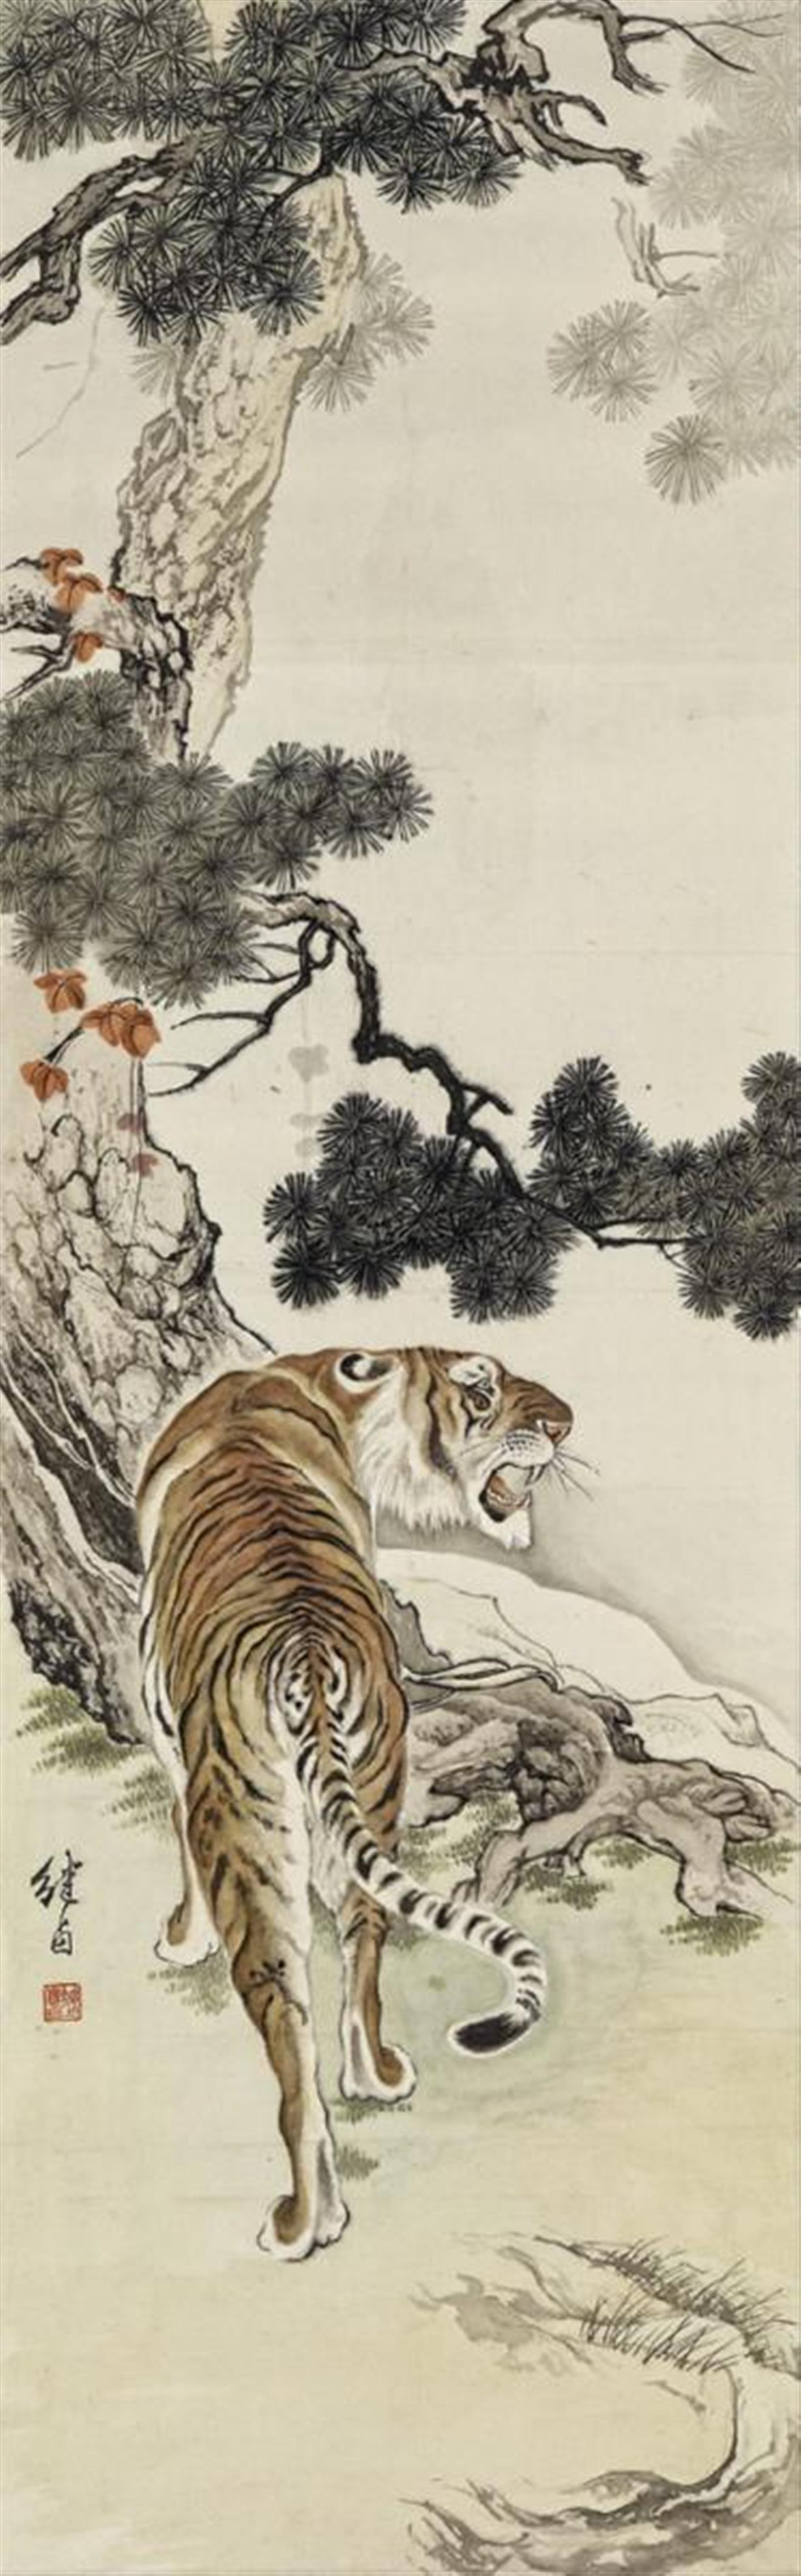 Liu Jiyou - Tiger under a pine tree. - image-1